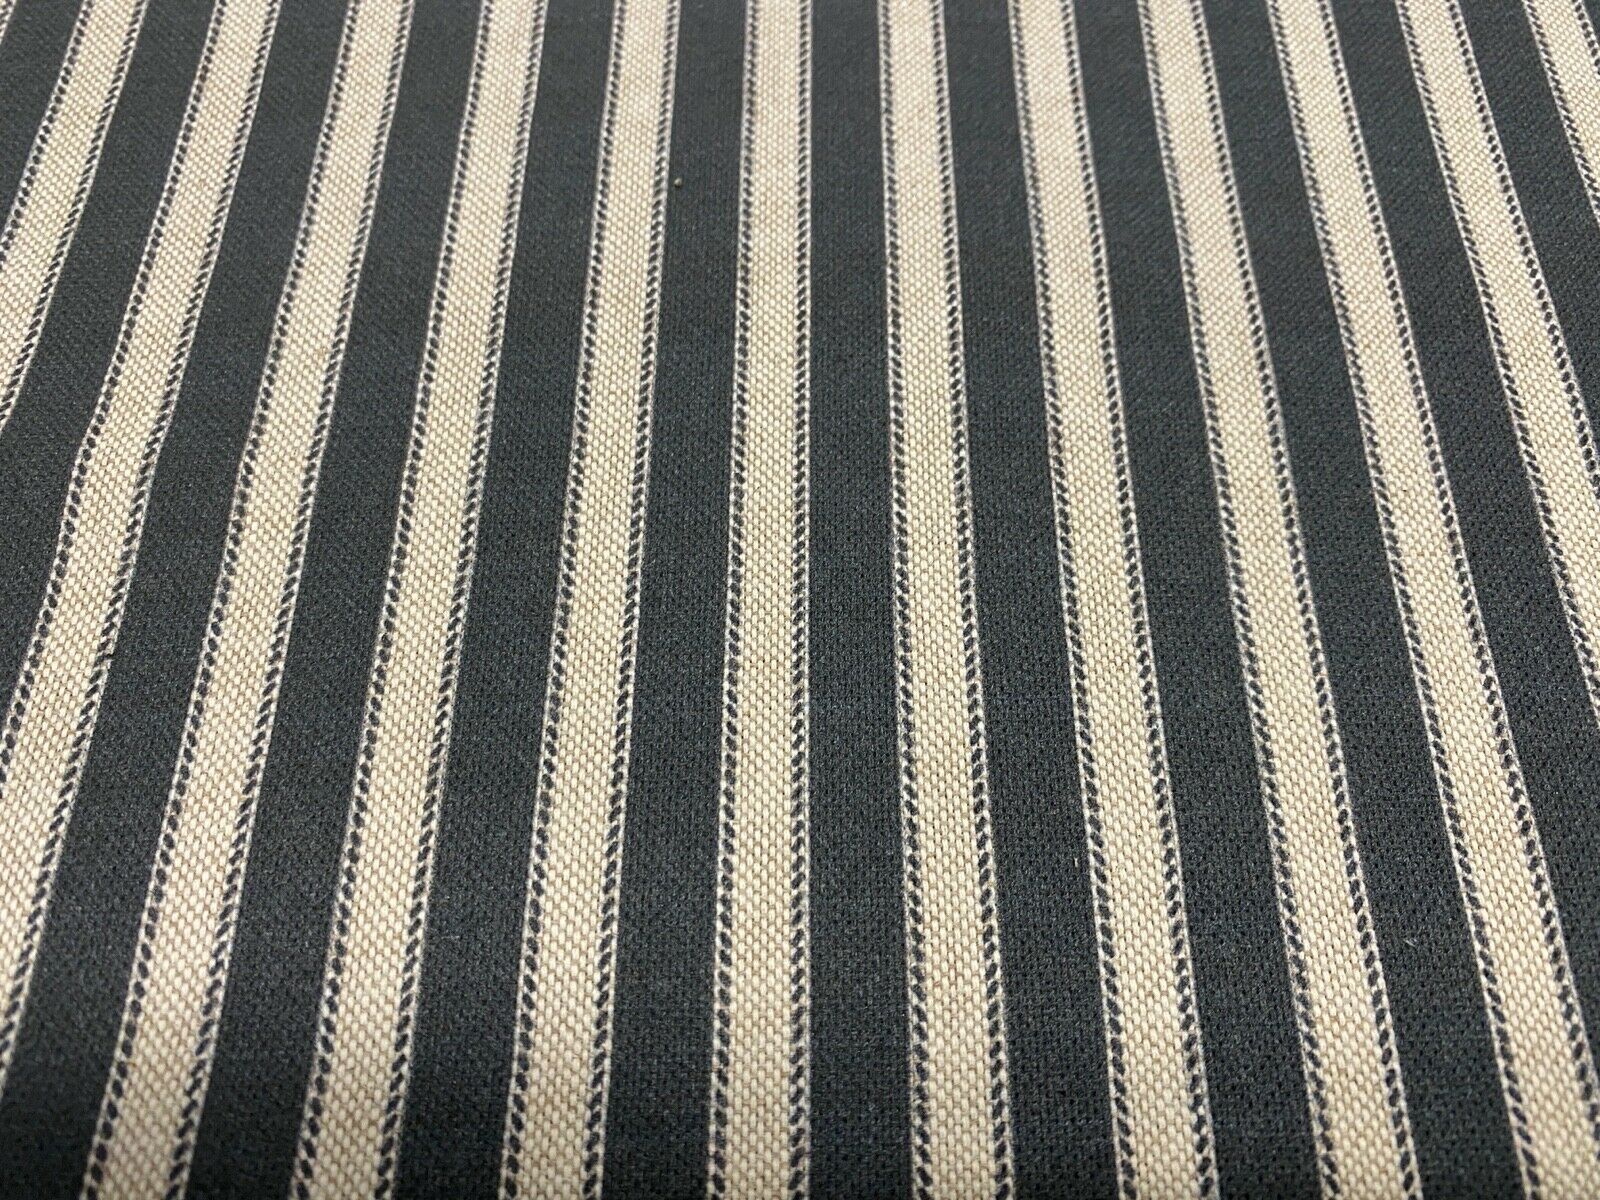 Harlow Ticking Stripe Cotton BLACK & BEIGE - Frank Thomas Interiors